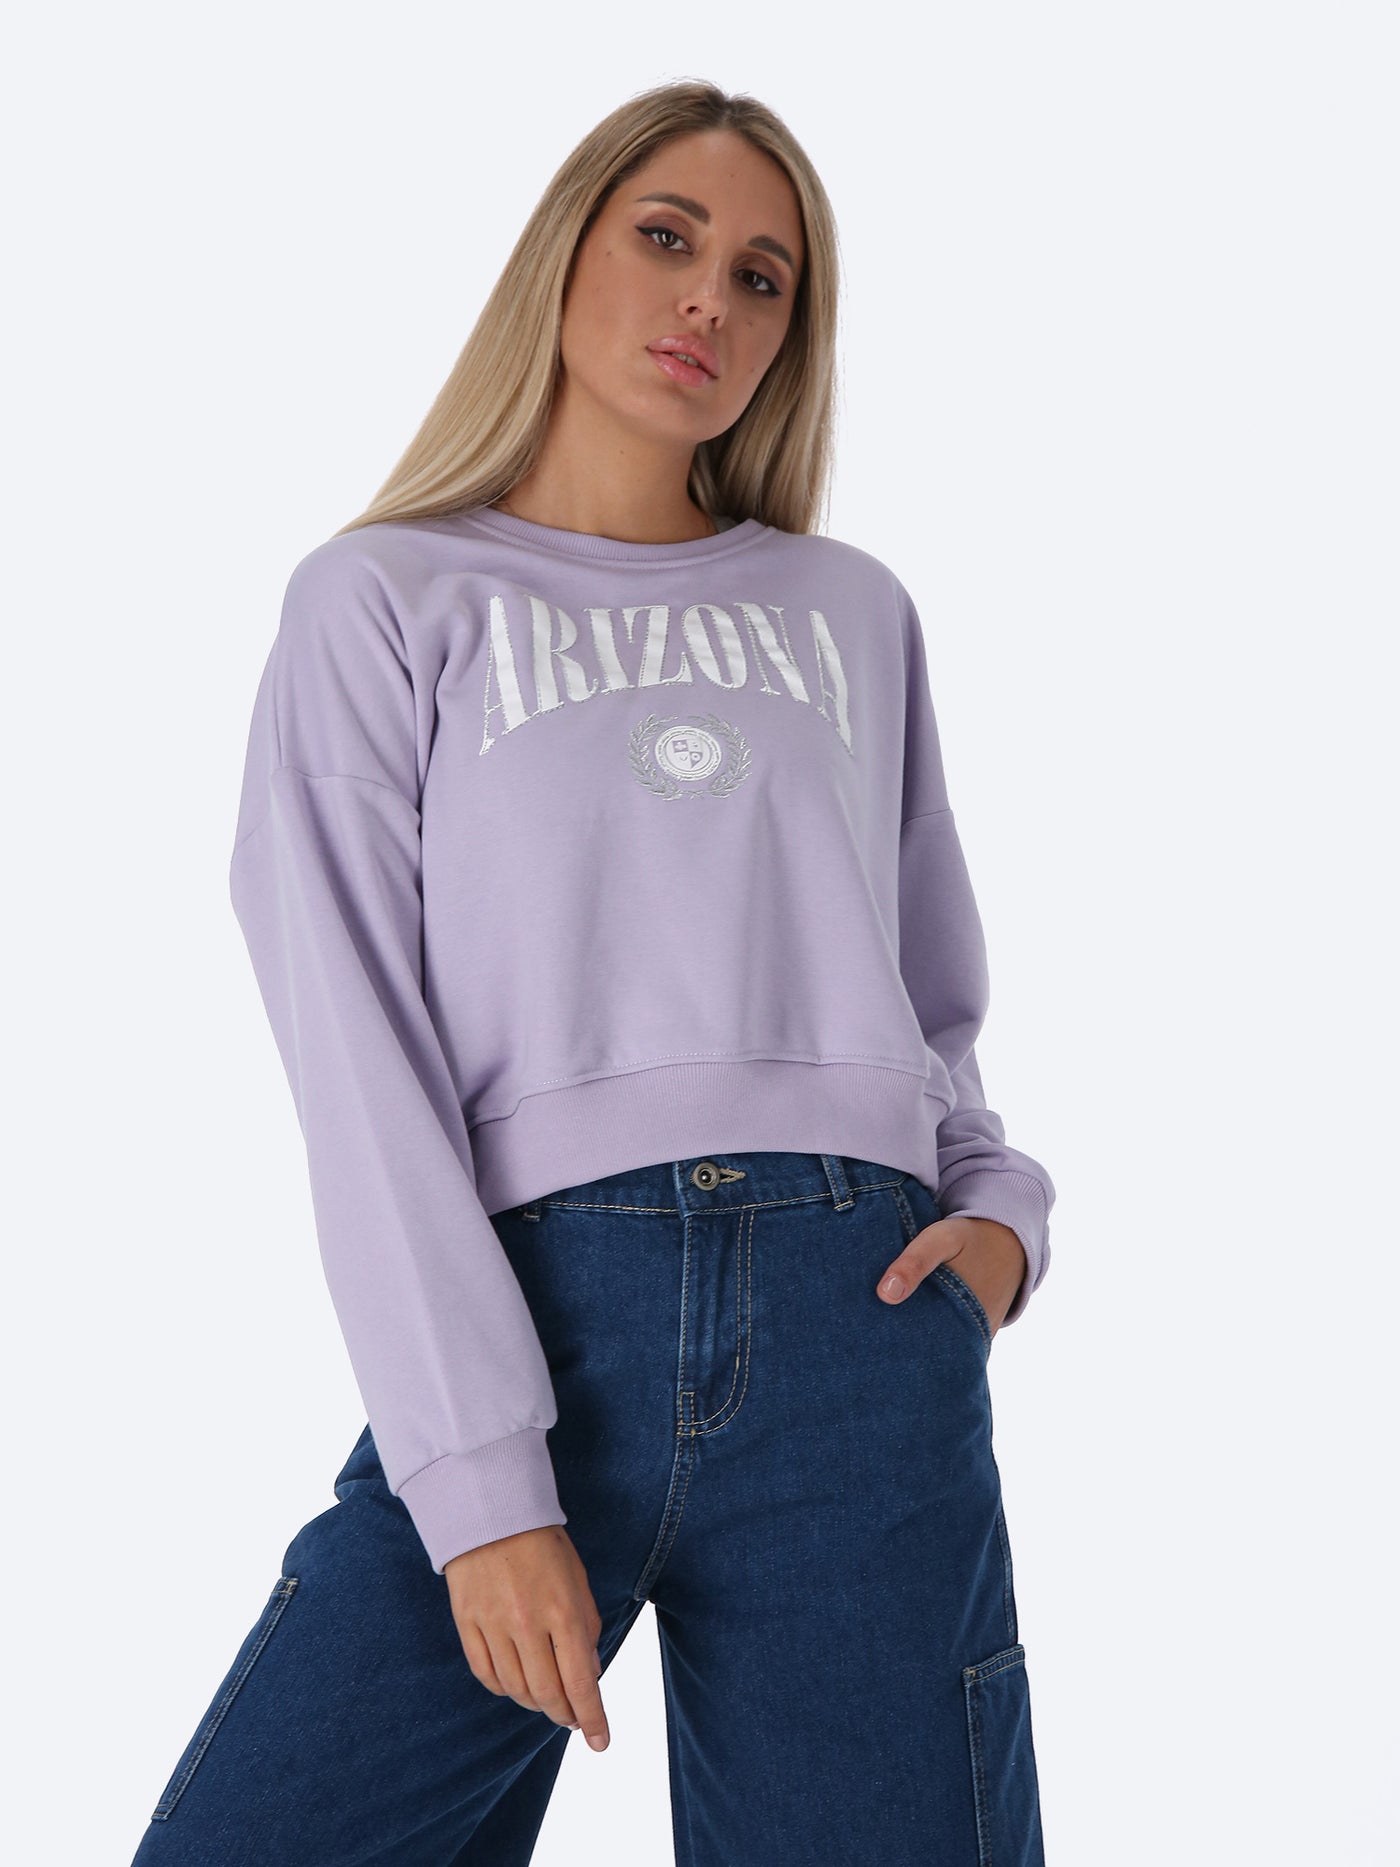 Sweatshirt - "Arizona" - Slip-on